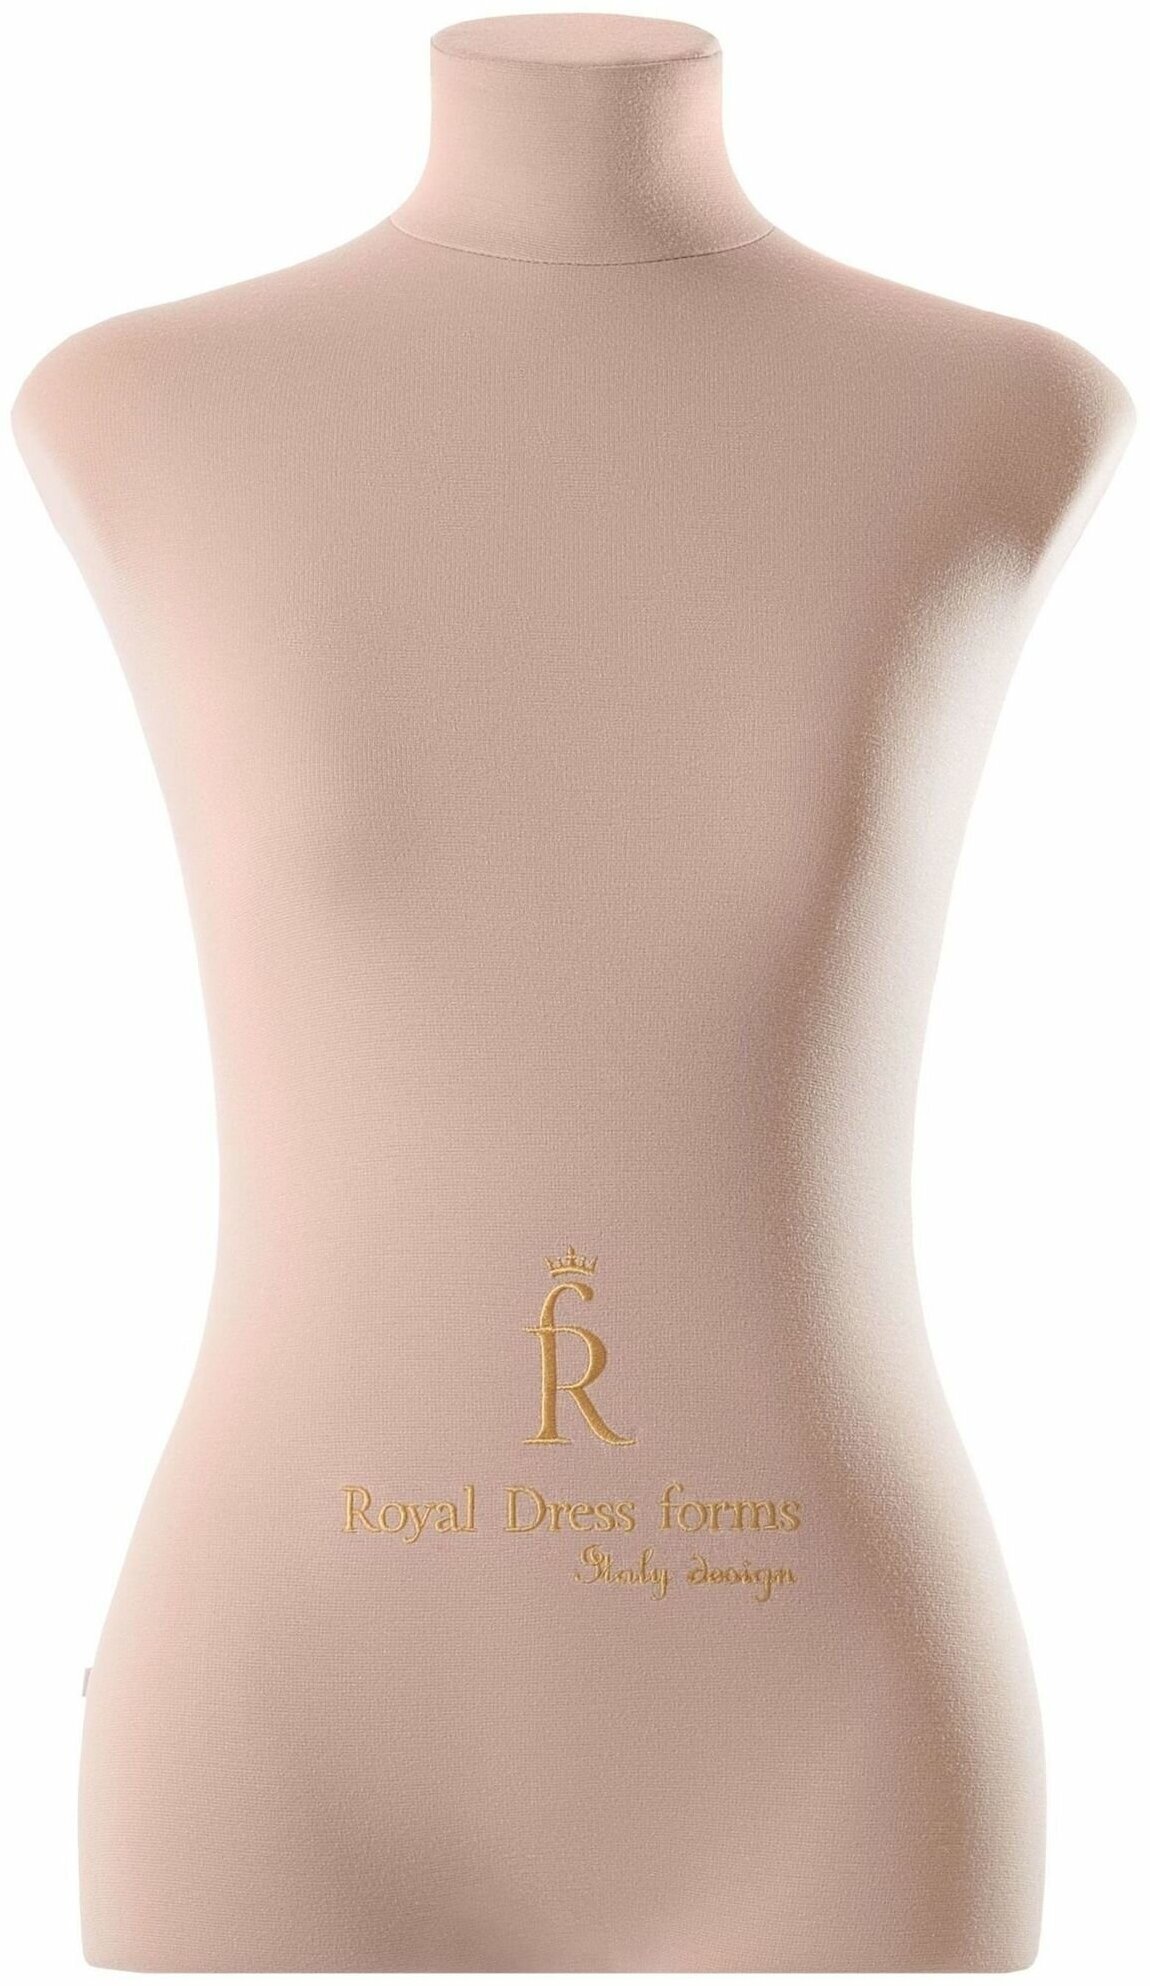 Манекен портновский Кристина Стандарт Royal Dress forms, размер 42